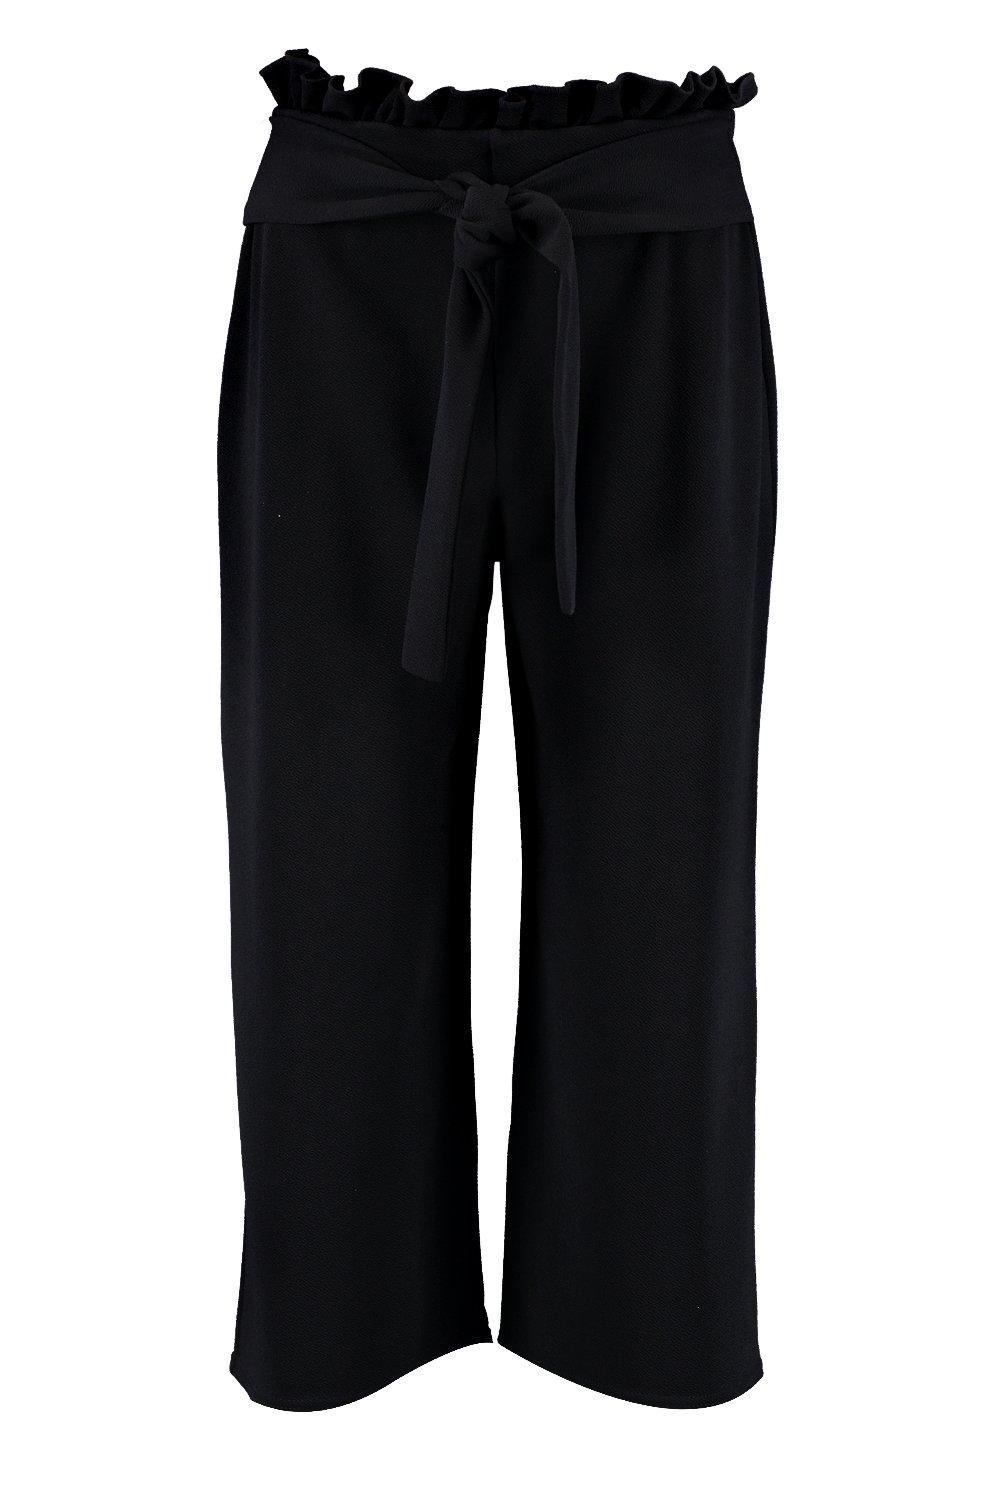 Basics High Waisted Jersey Knit Culotte Pants